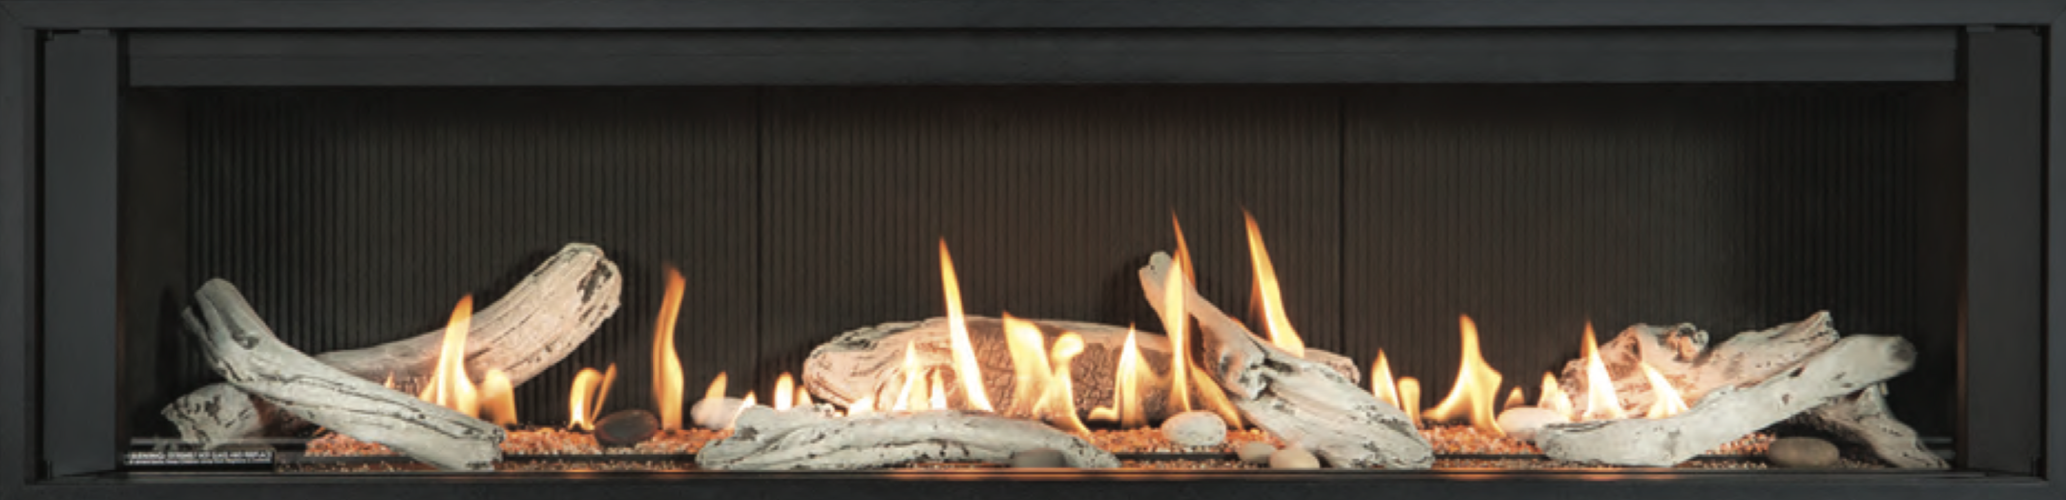 gas fireplace repair